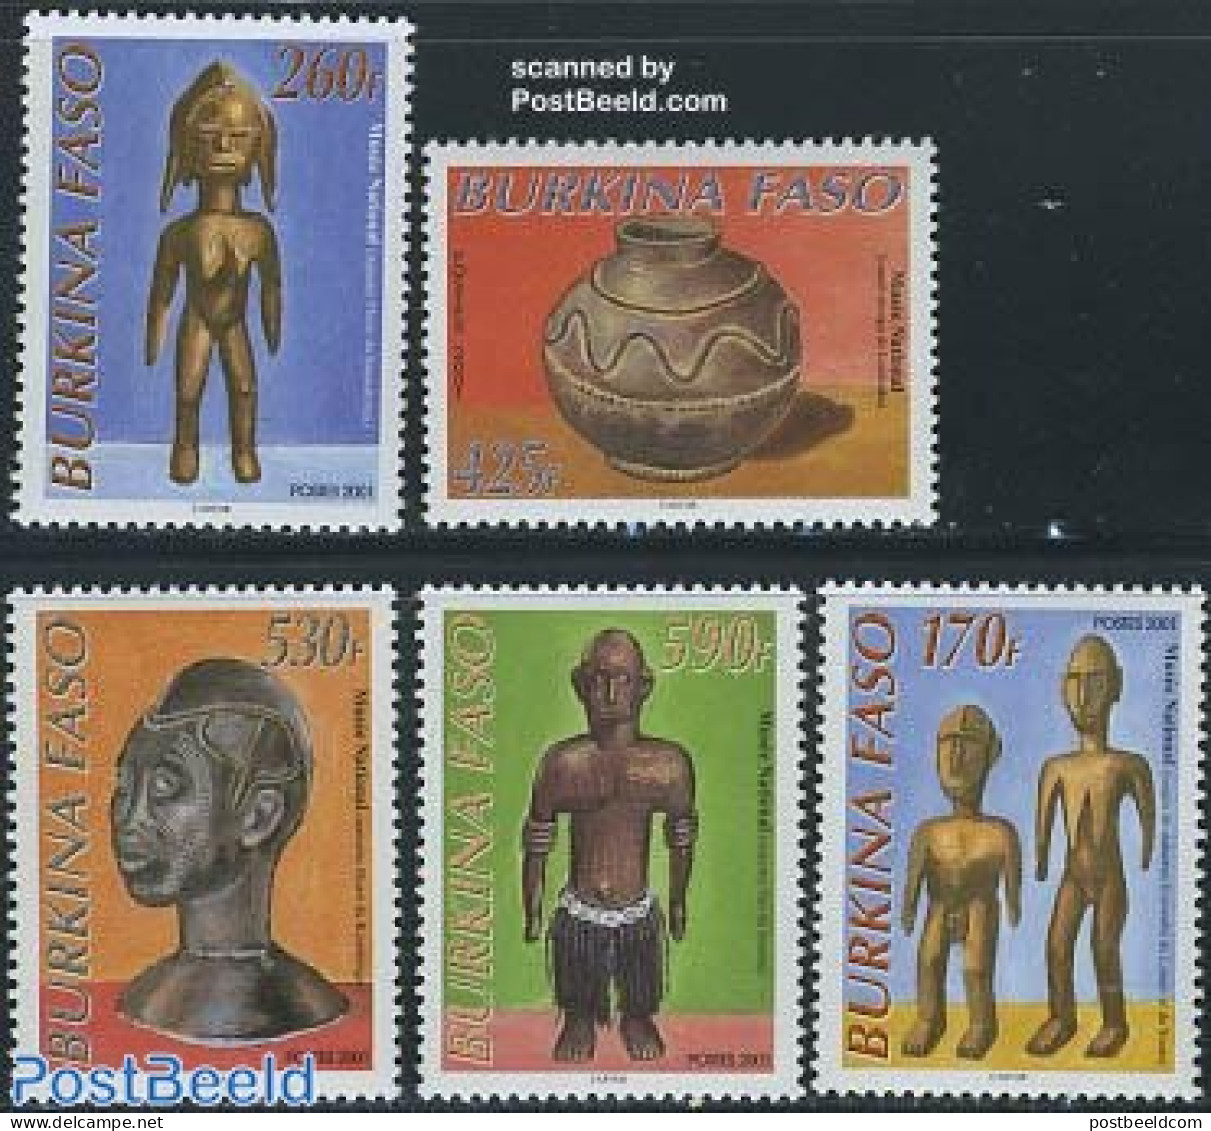 Burkina Faso 2001 National Museum 5v, Mint NH, Art - Museums - Sculpture - Museums